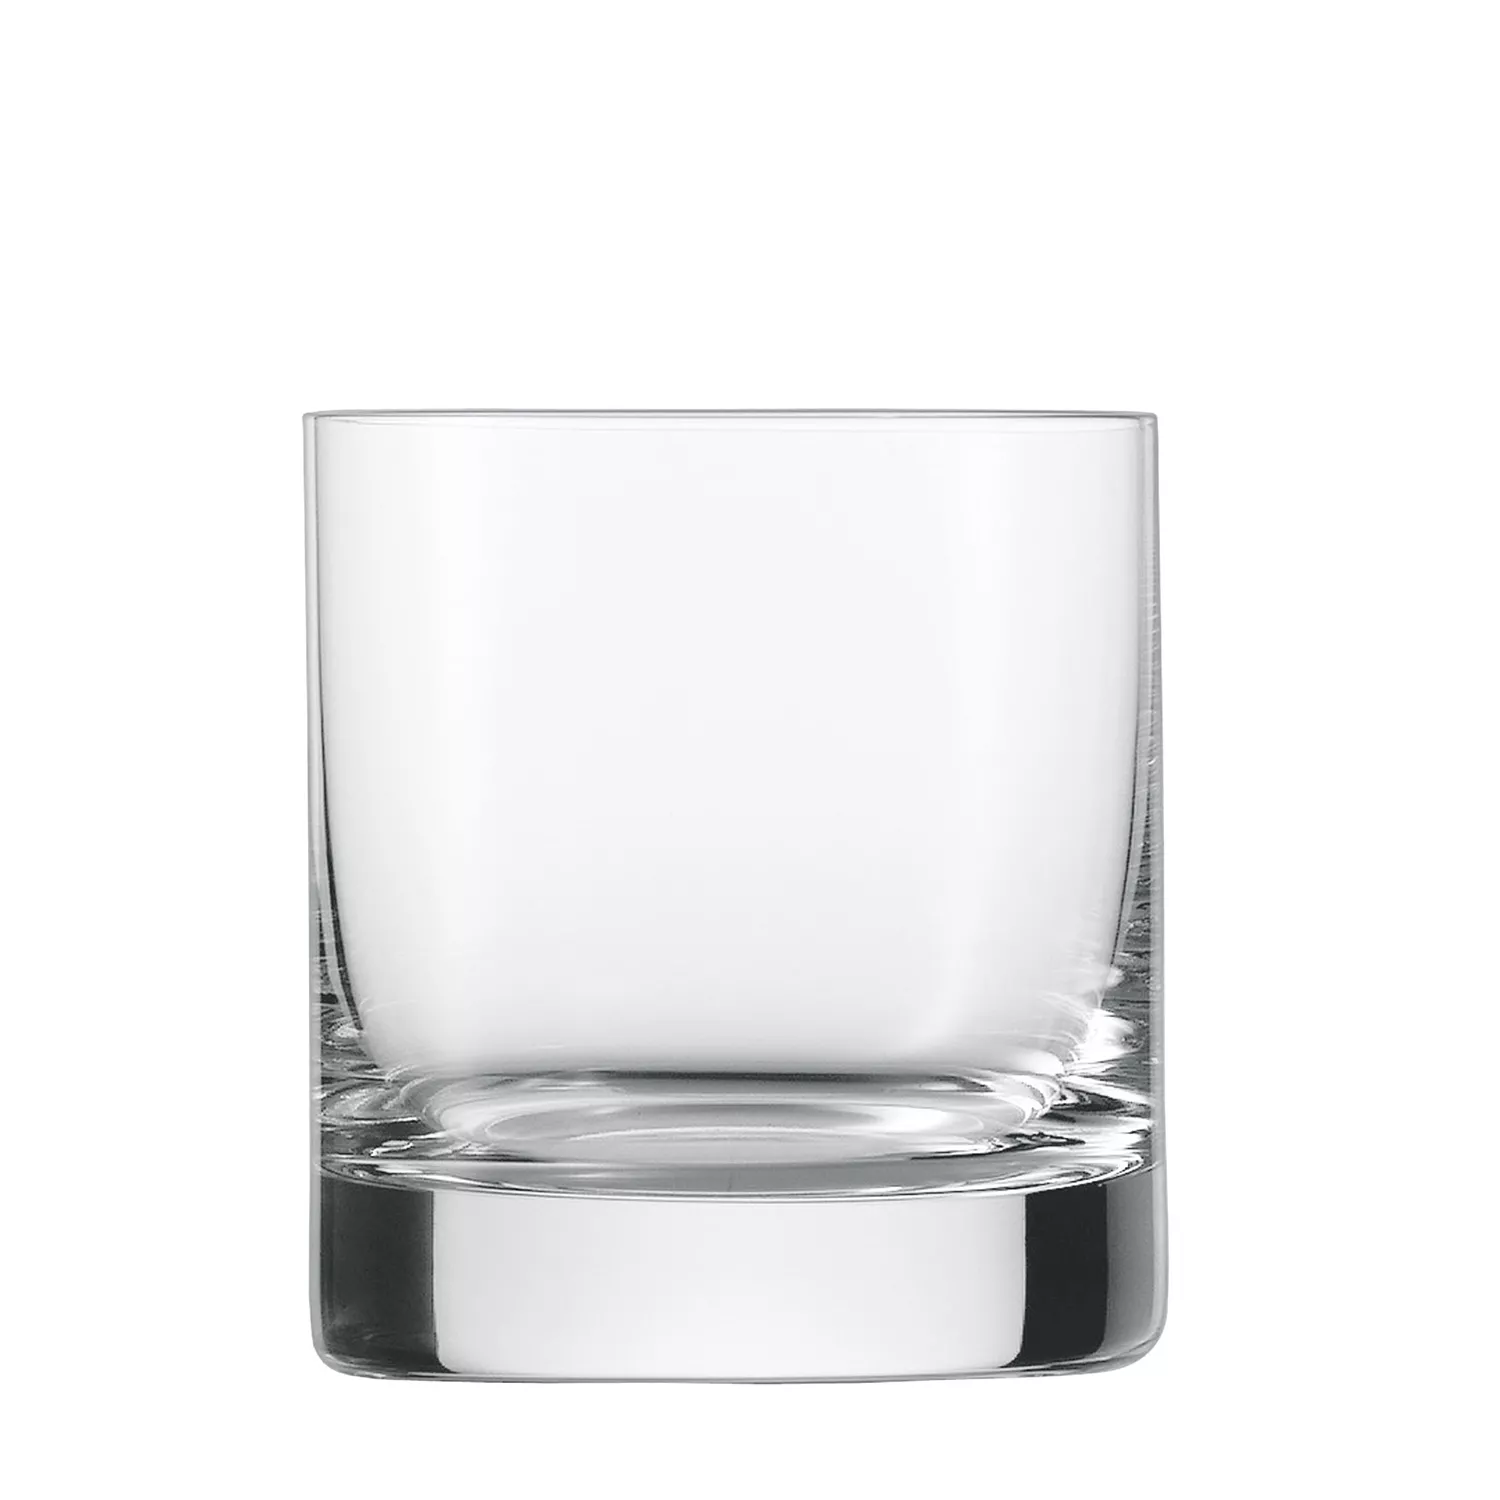 Schott Zwiesel Tritan Paris on The Rocks Glasses - Set of 6 Size Whiskey Clear